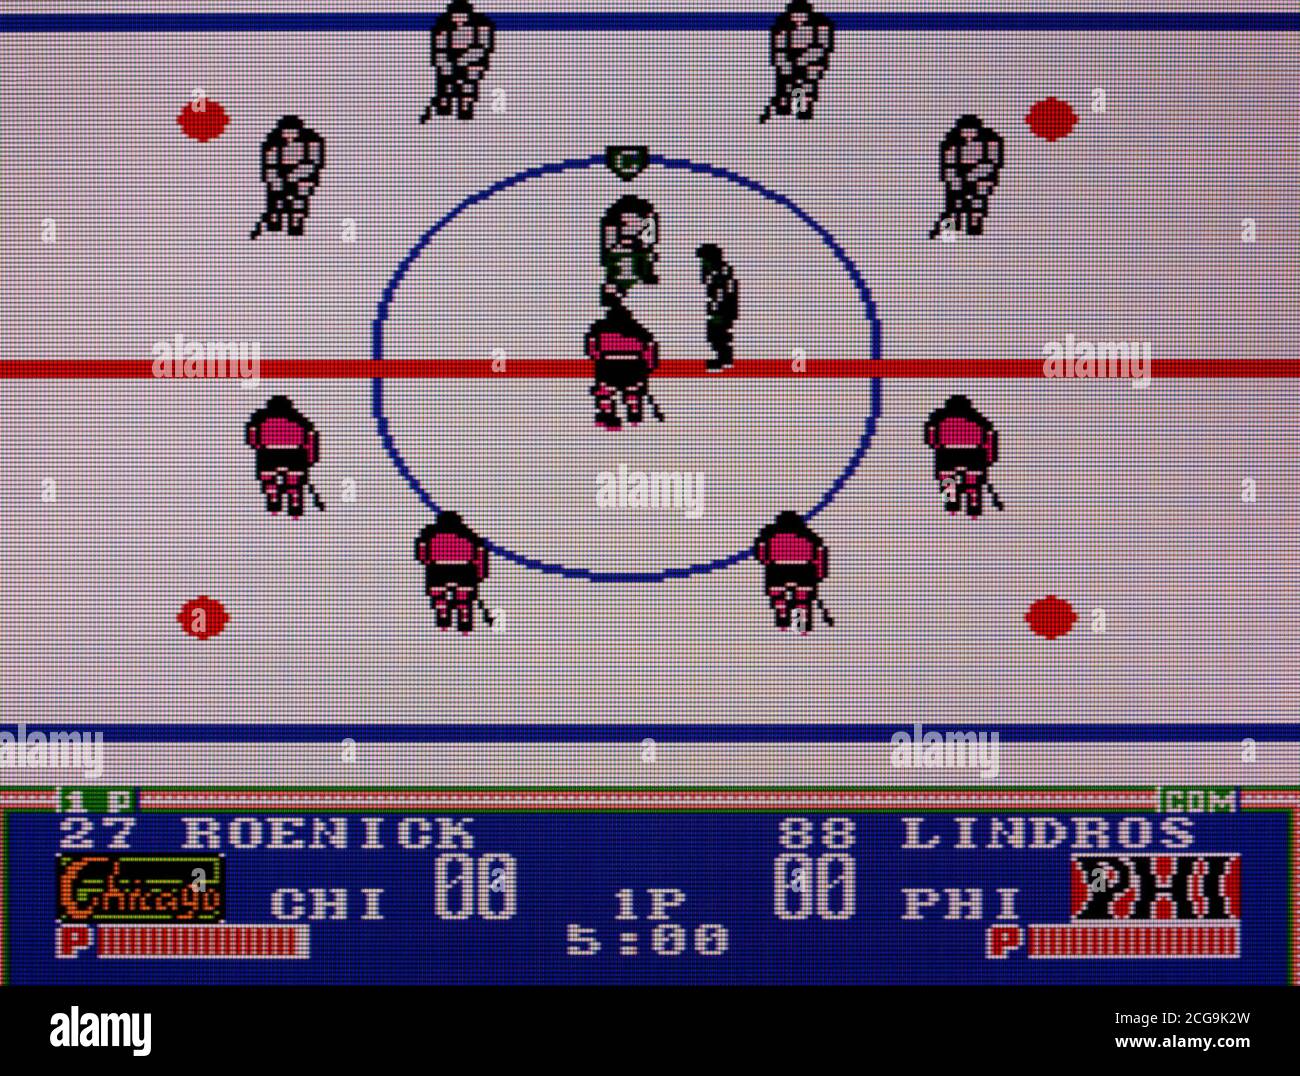 Pro Sport Hockey, Nintendo